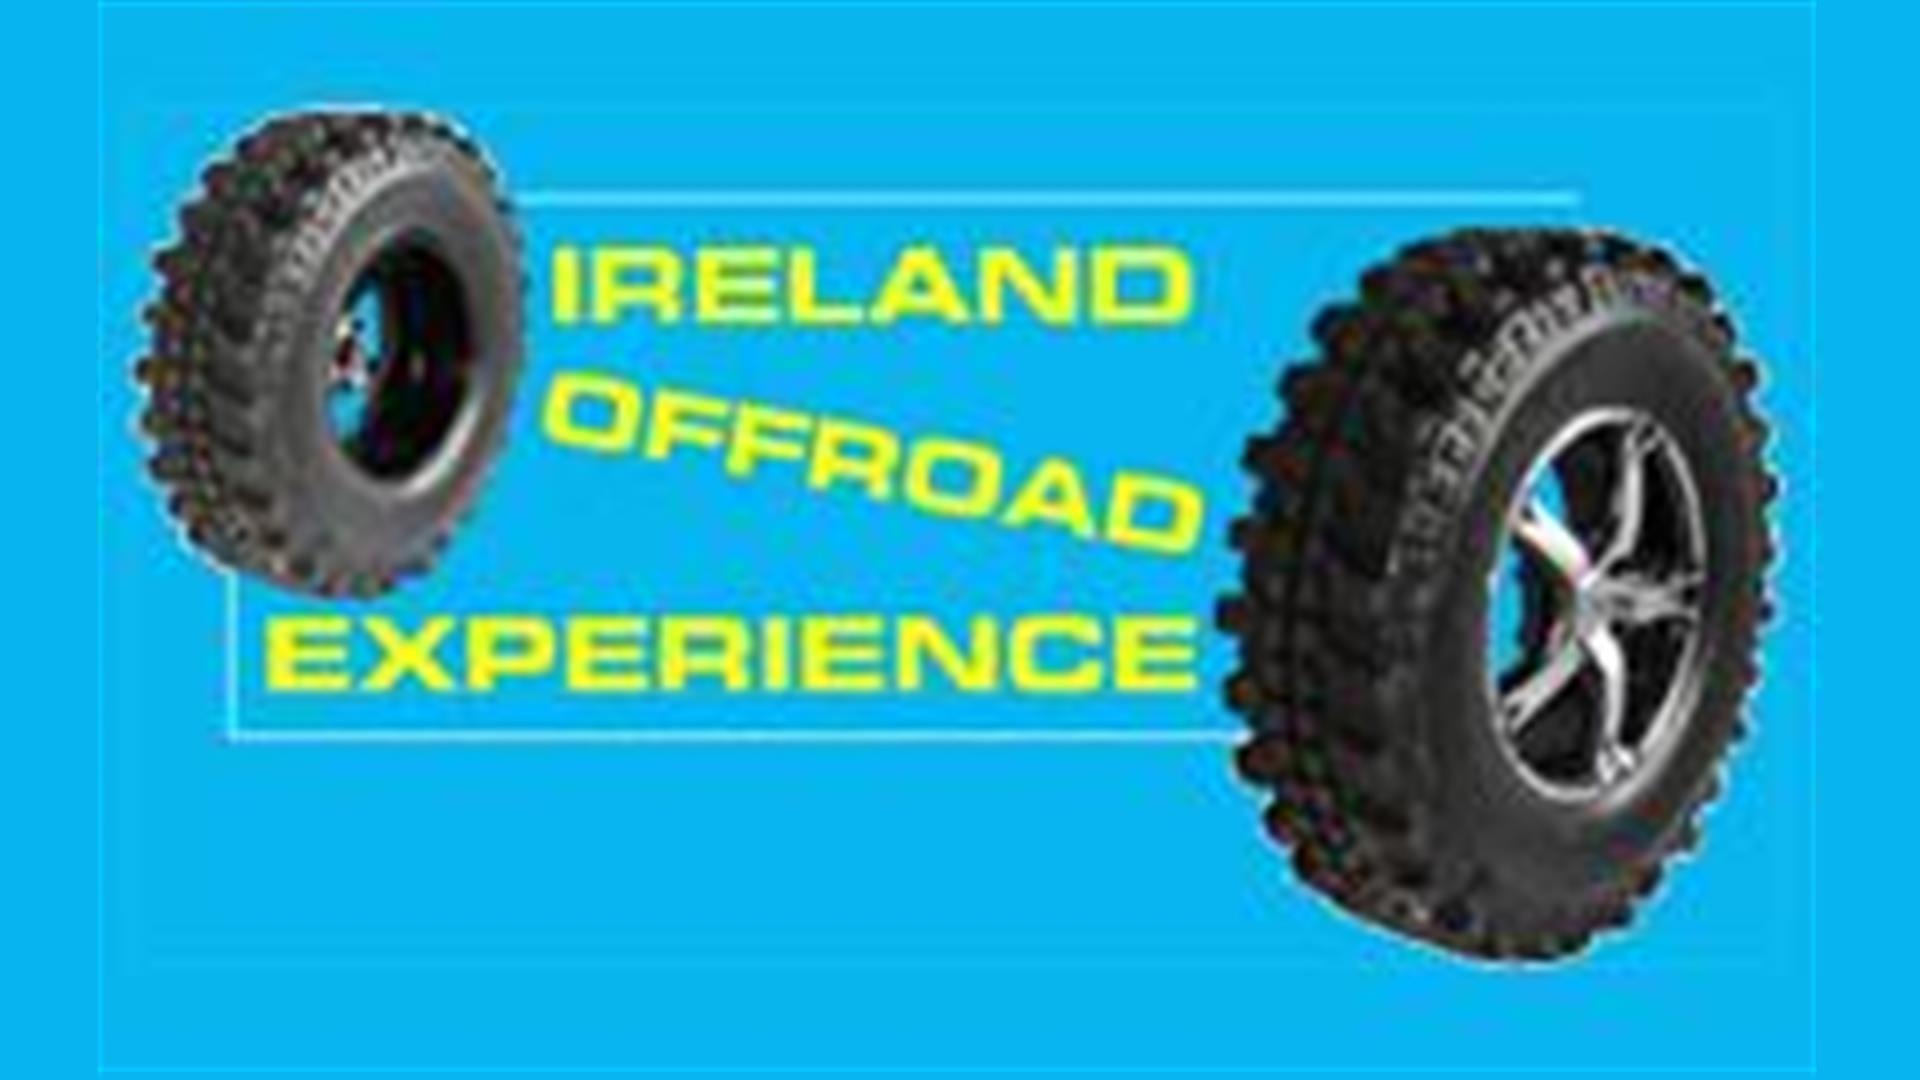 Ireland offroad experience logo